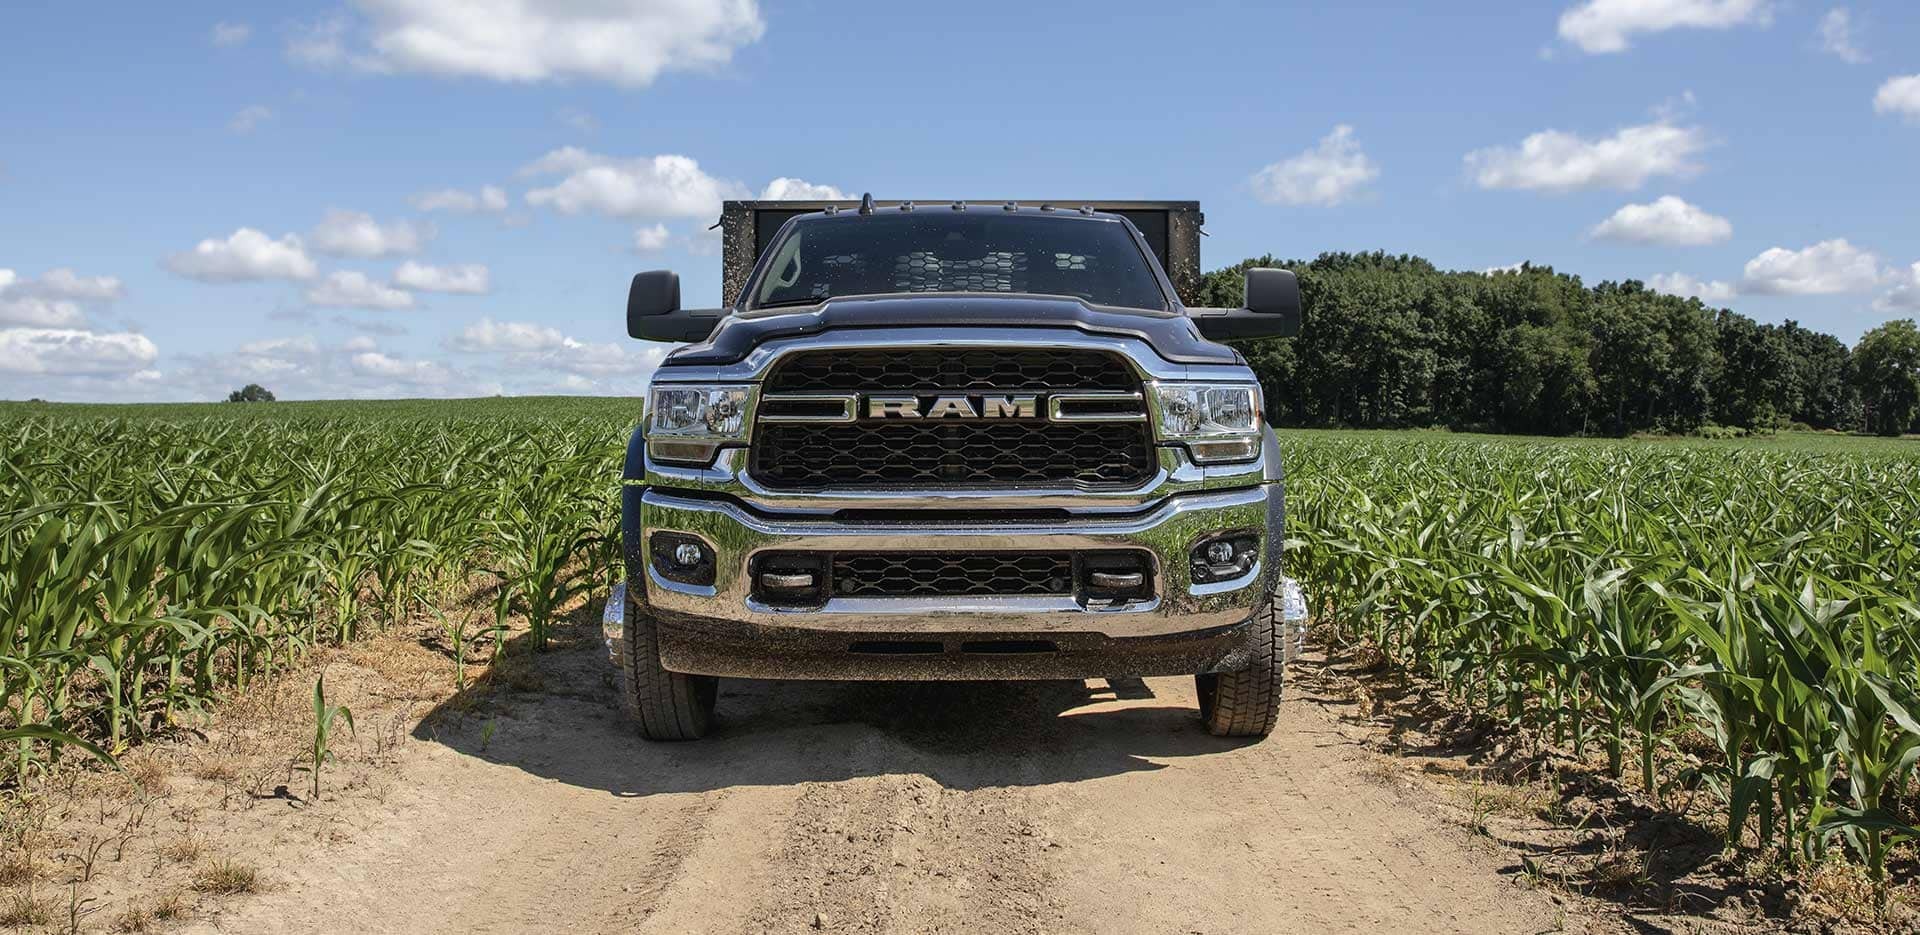 A RAM Truck parked in a field.